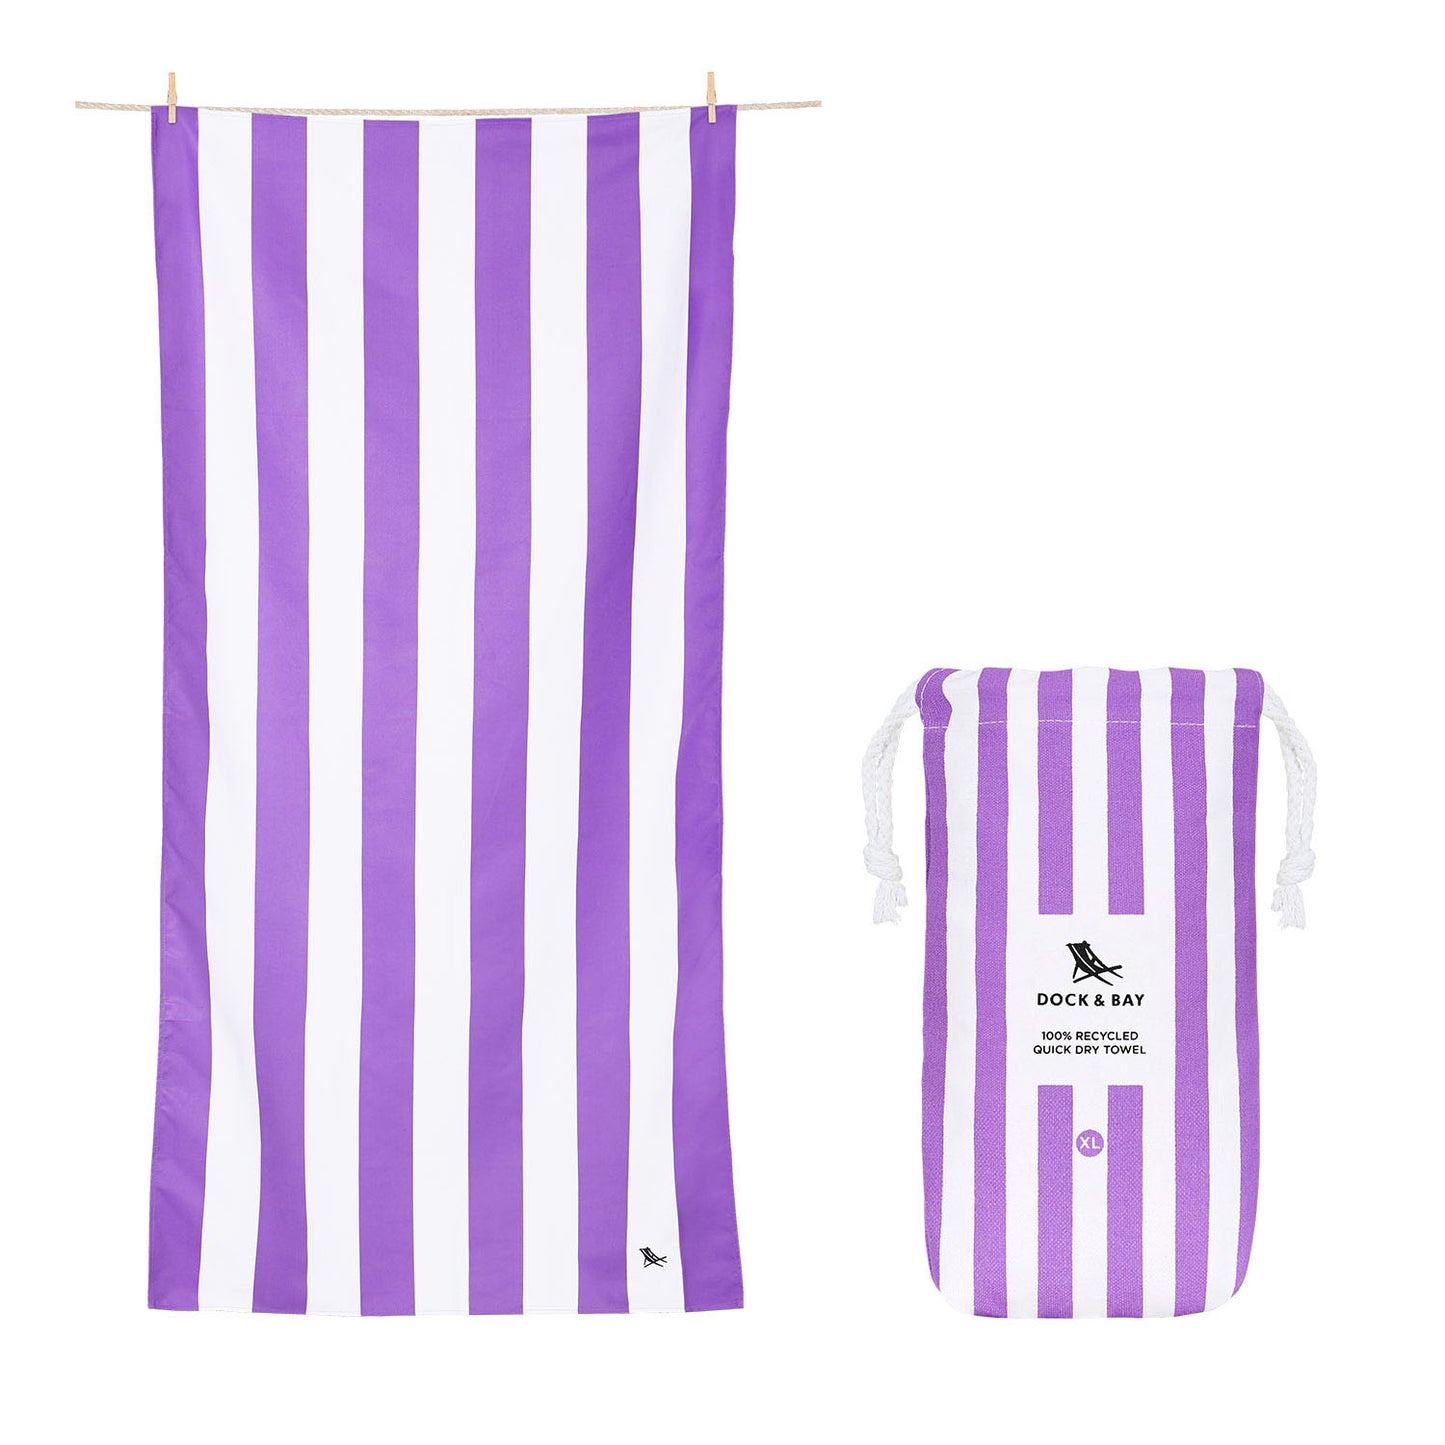 Dock & Bay Purple and White Stripe Beach Towel 